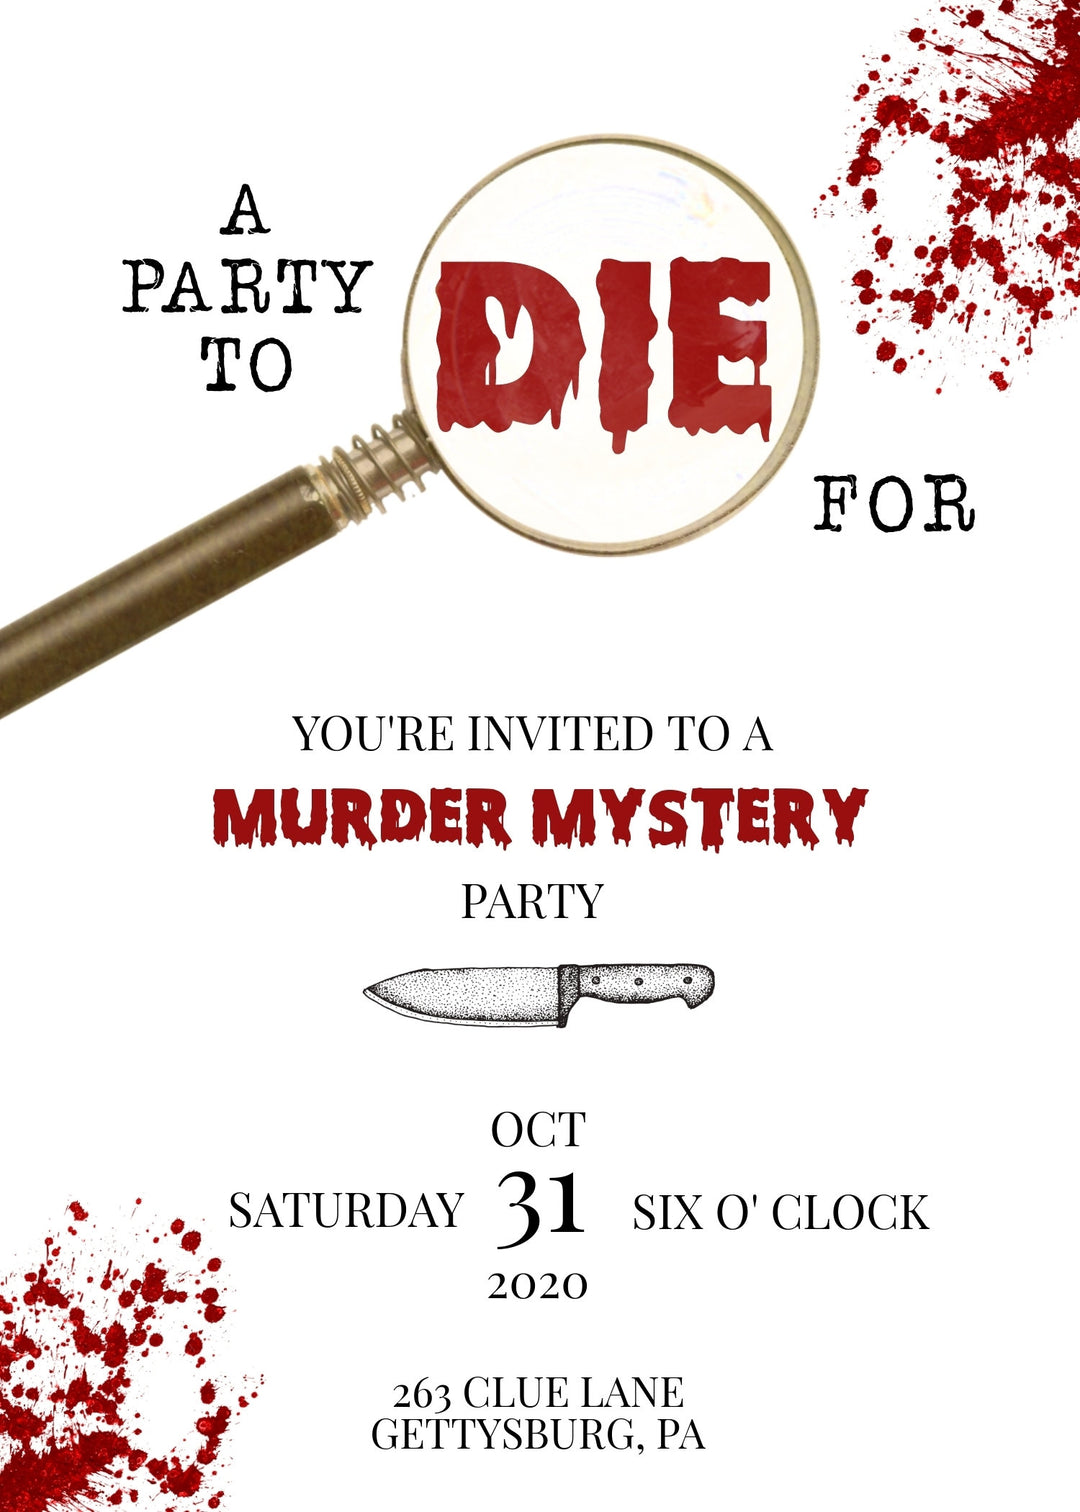 Murder Mystery Party Invitation - Murder Mystery Dinner Party Invitation - Halloween Party Invitation - Halloween Clue Murder Mystery Invite